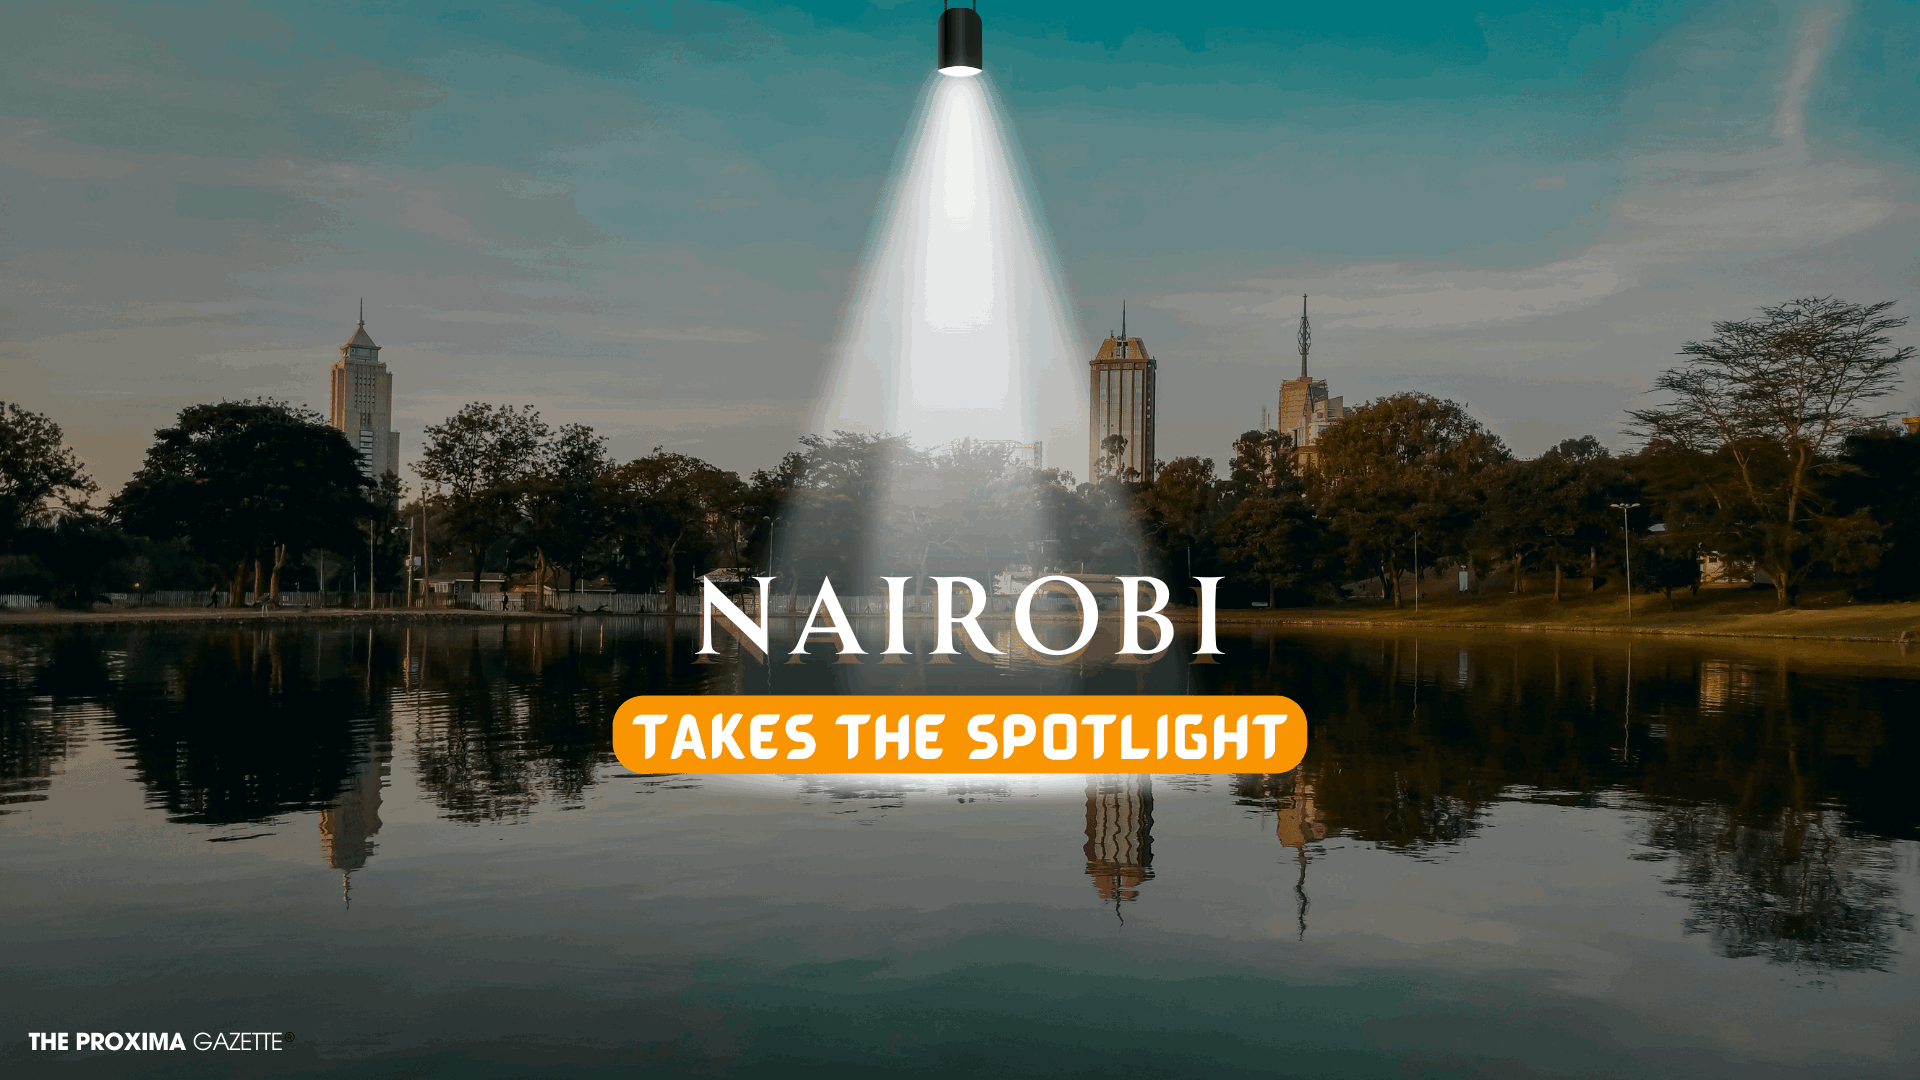 NAIROBI TAKES THE SPOTLIGHT